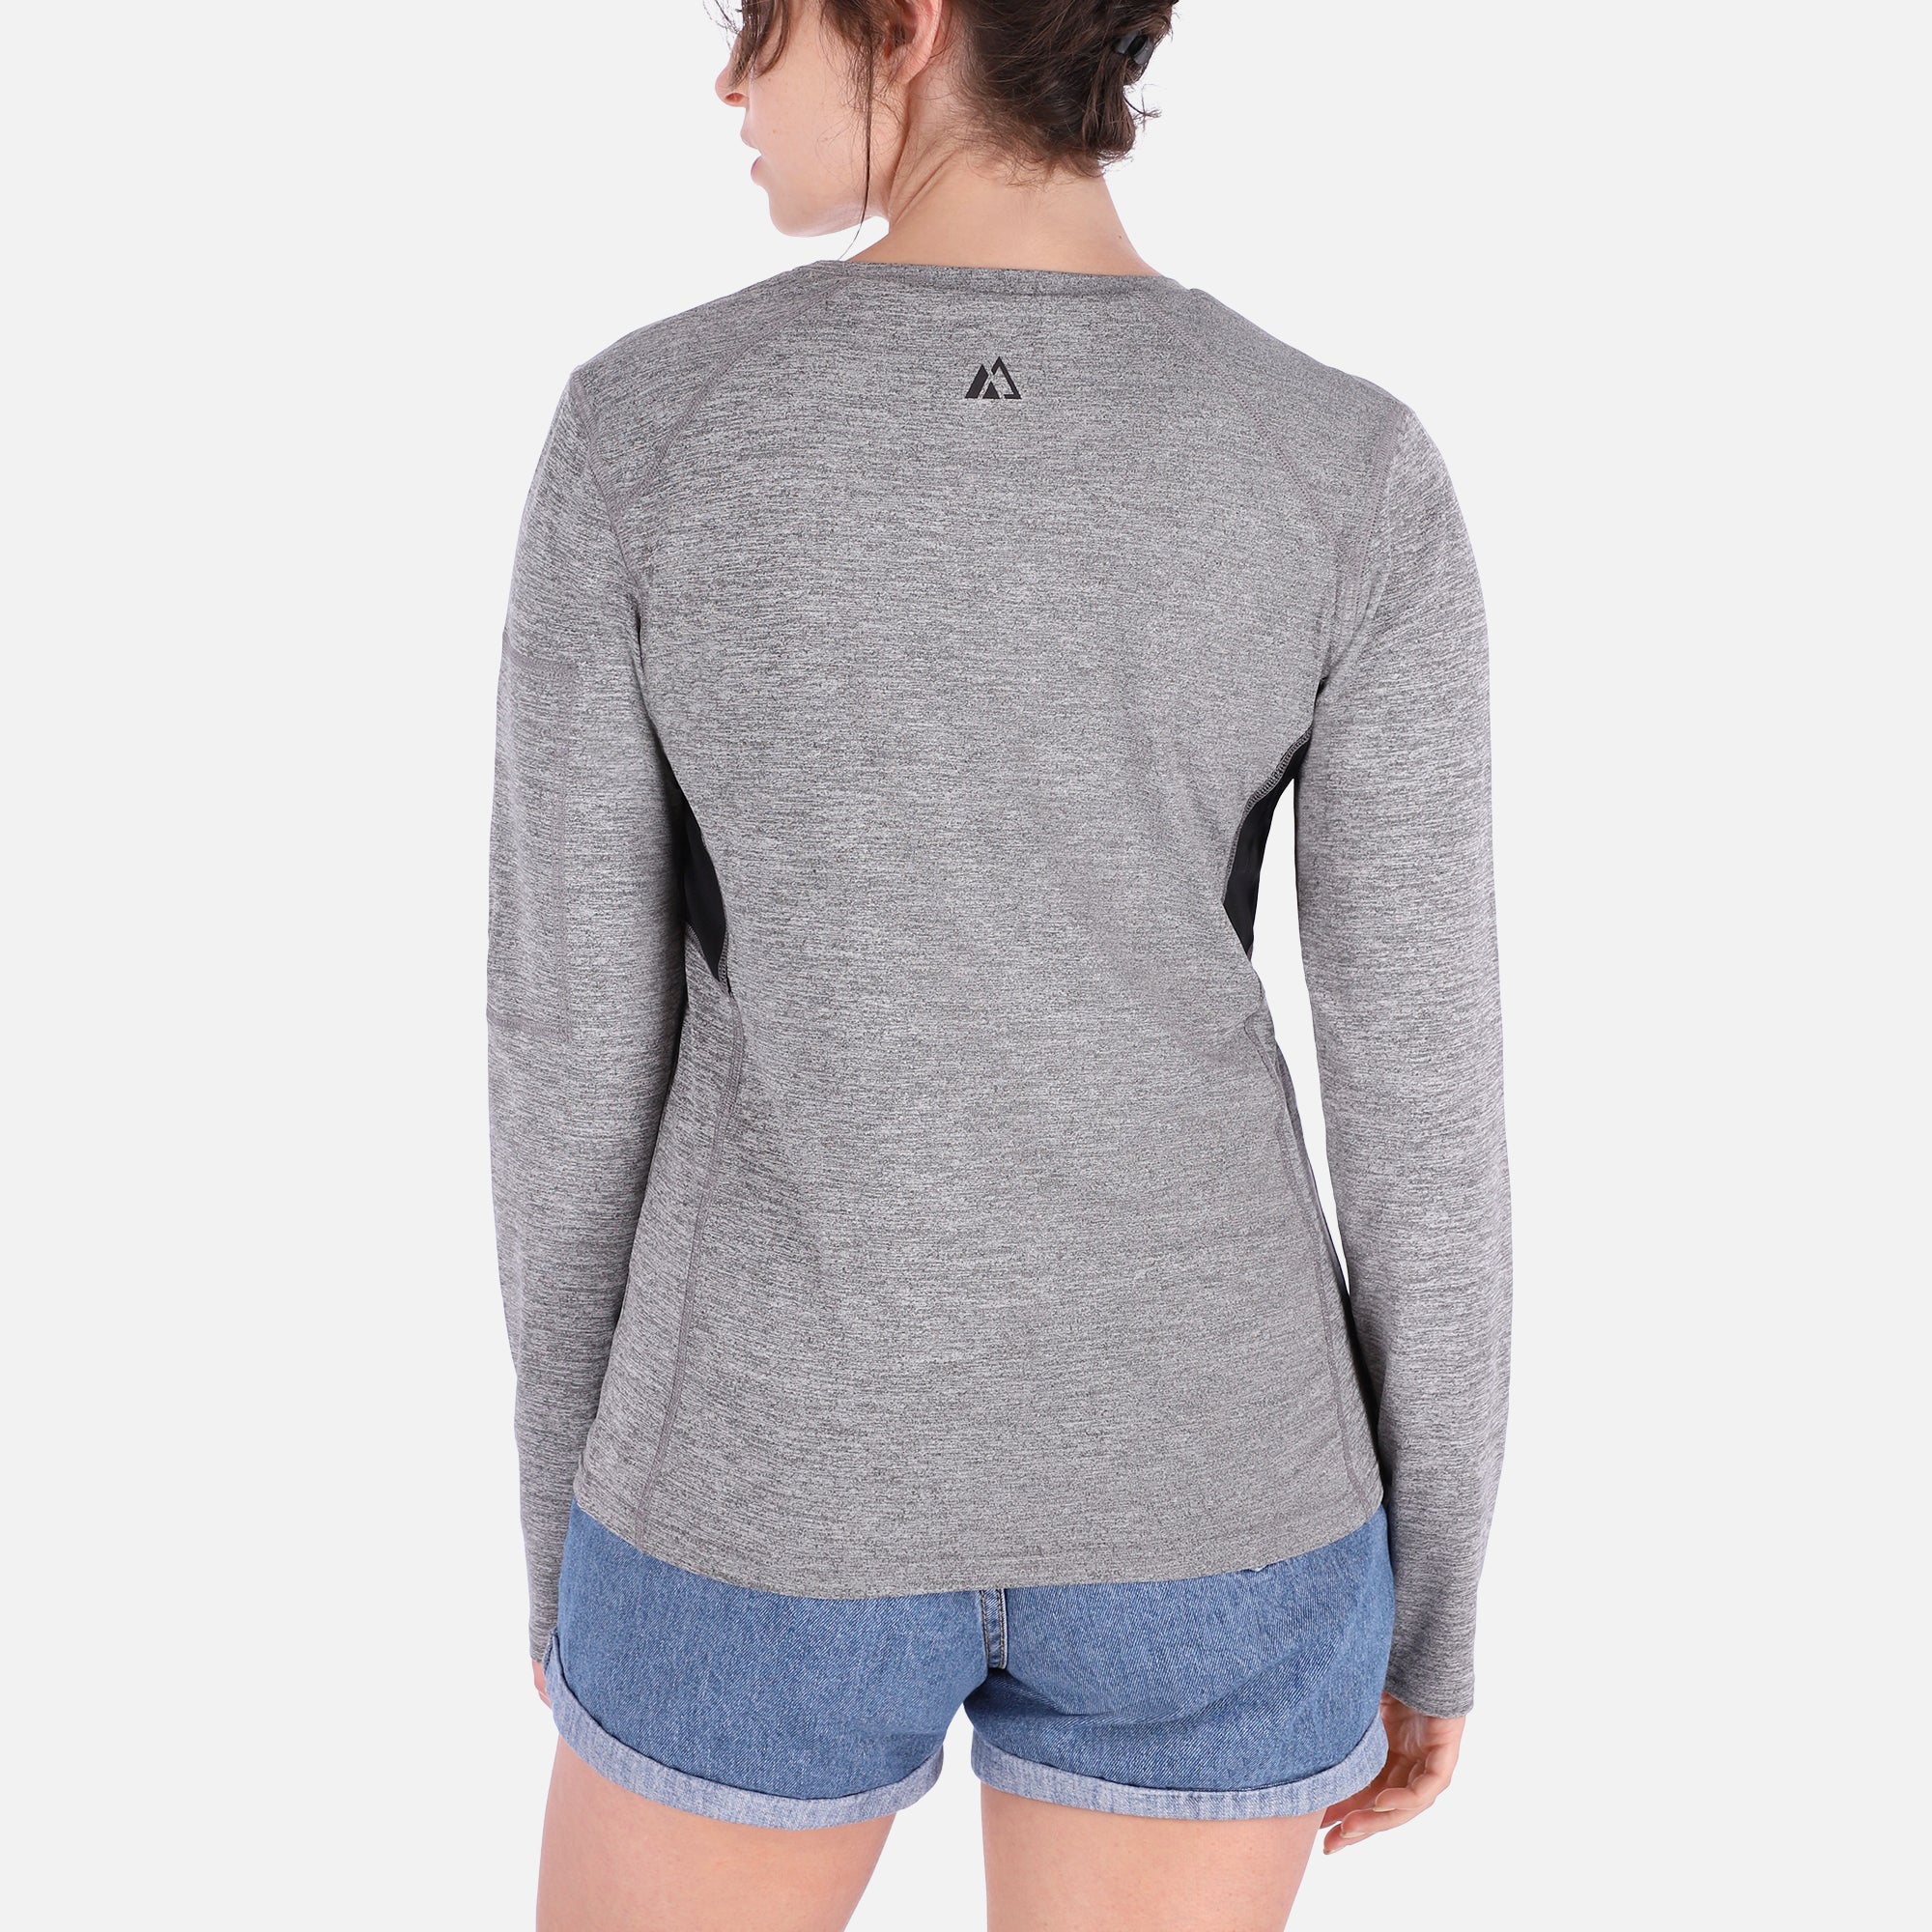 Women's Quick Dry Long Sleeve Shirt (Grey)